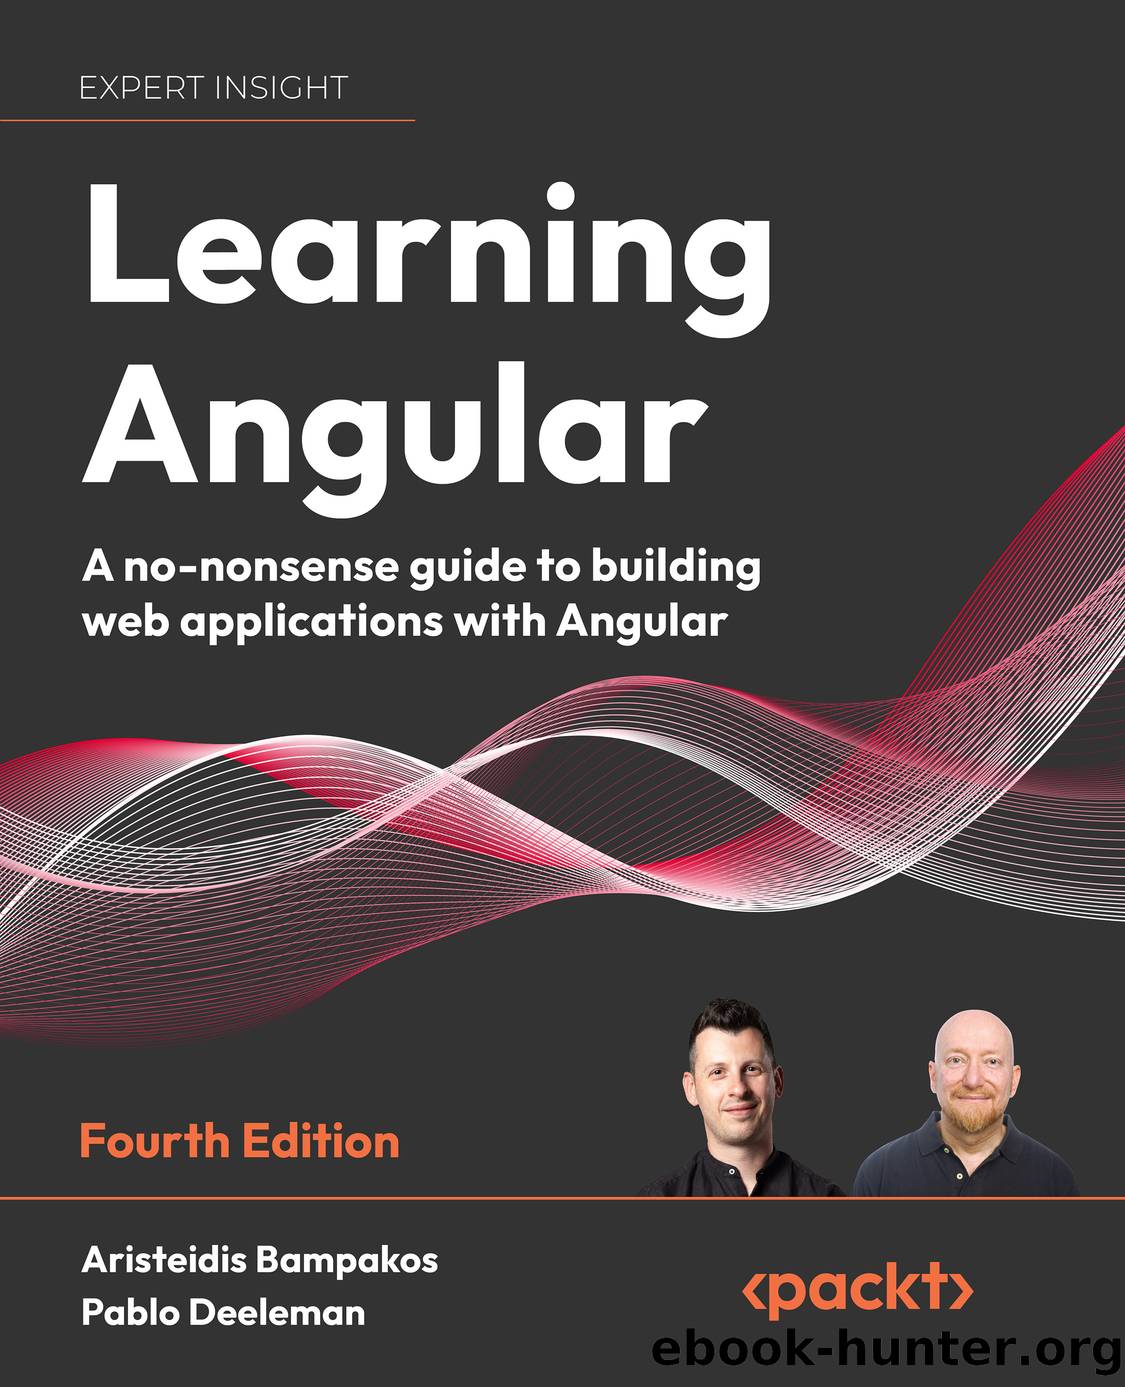 Learning Angular - Fourth Edition by Aristeidis Bampakos & Pablo Deeleman